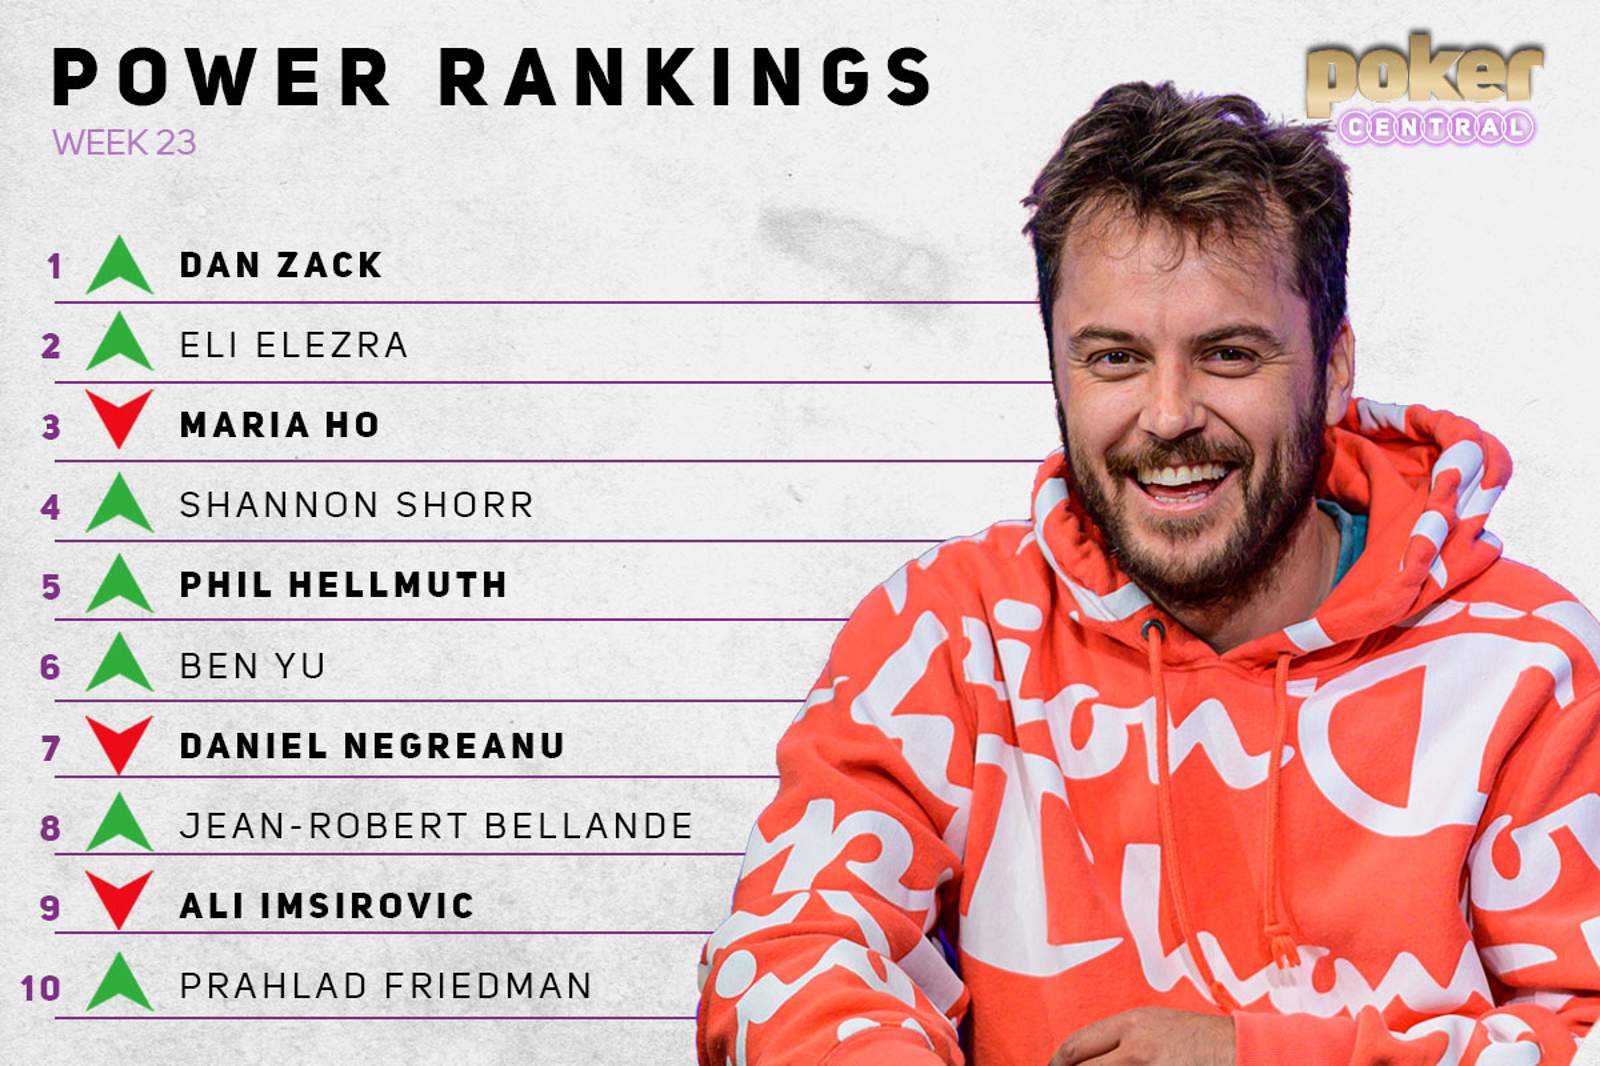 Power Rankings: Zack & Elezra Jump to the Top, Friedman's First Top 10